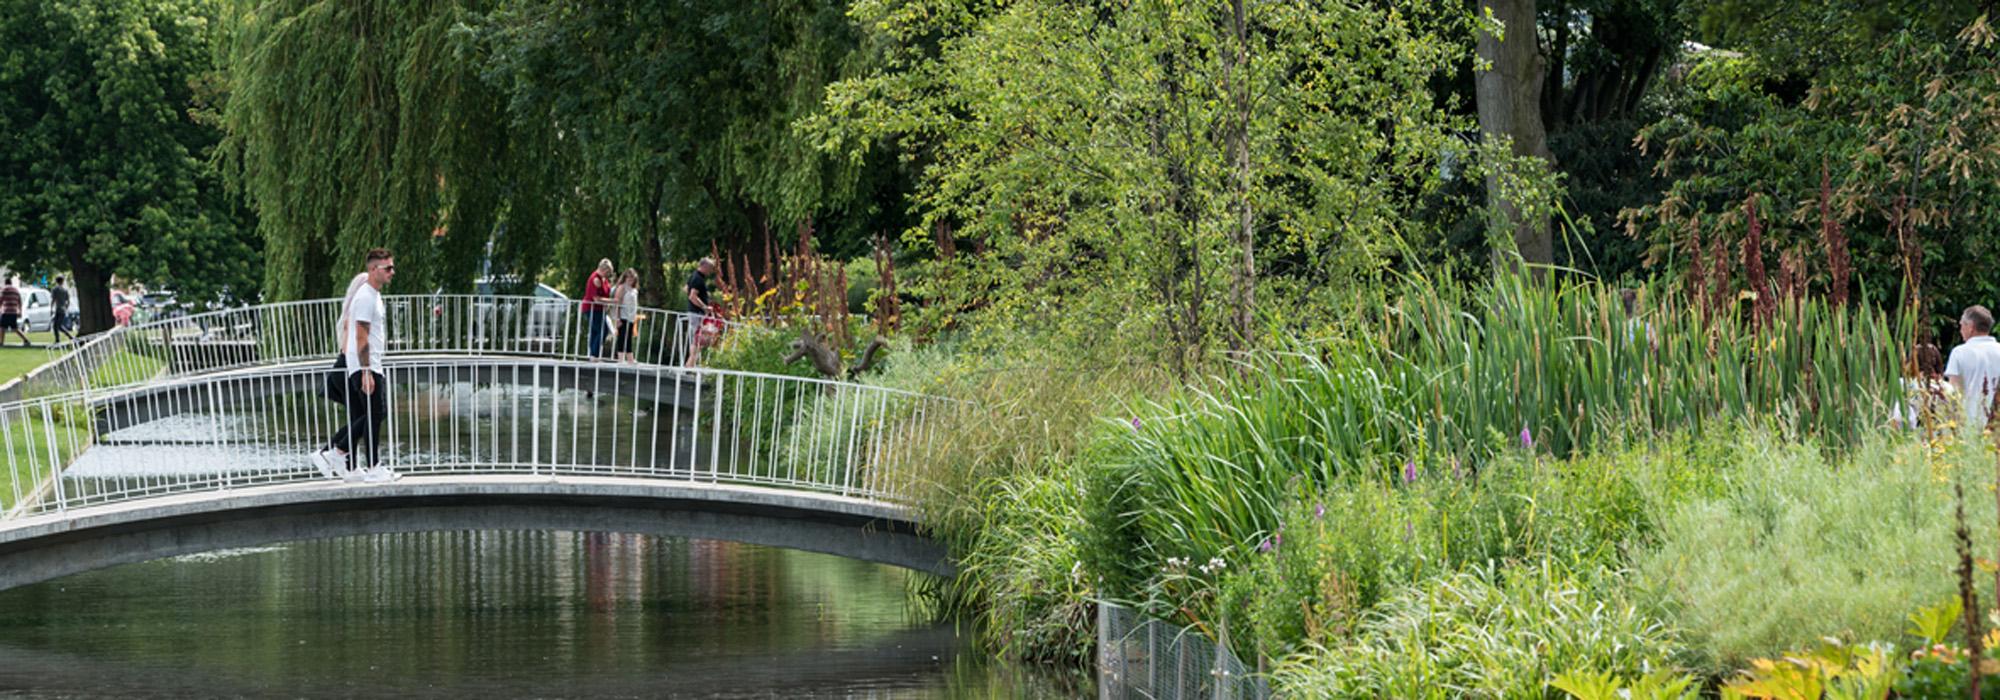 Hemel Water Gardens after restoration, Hemel, UK